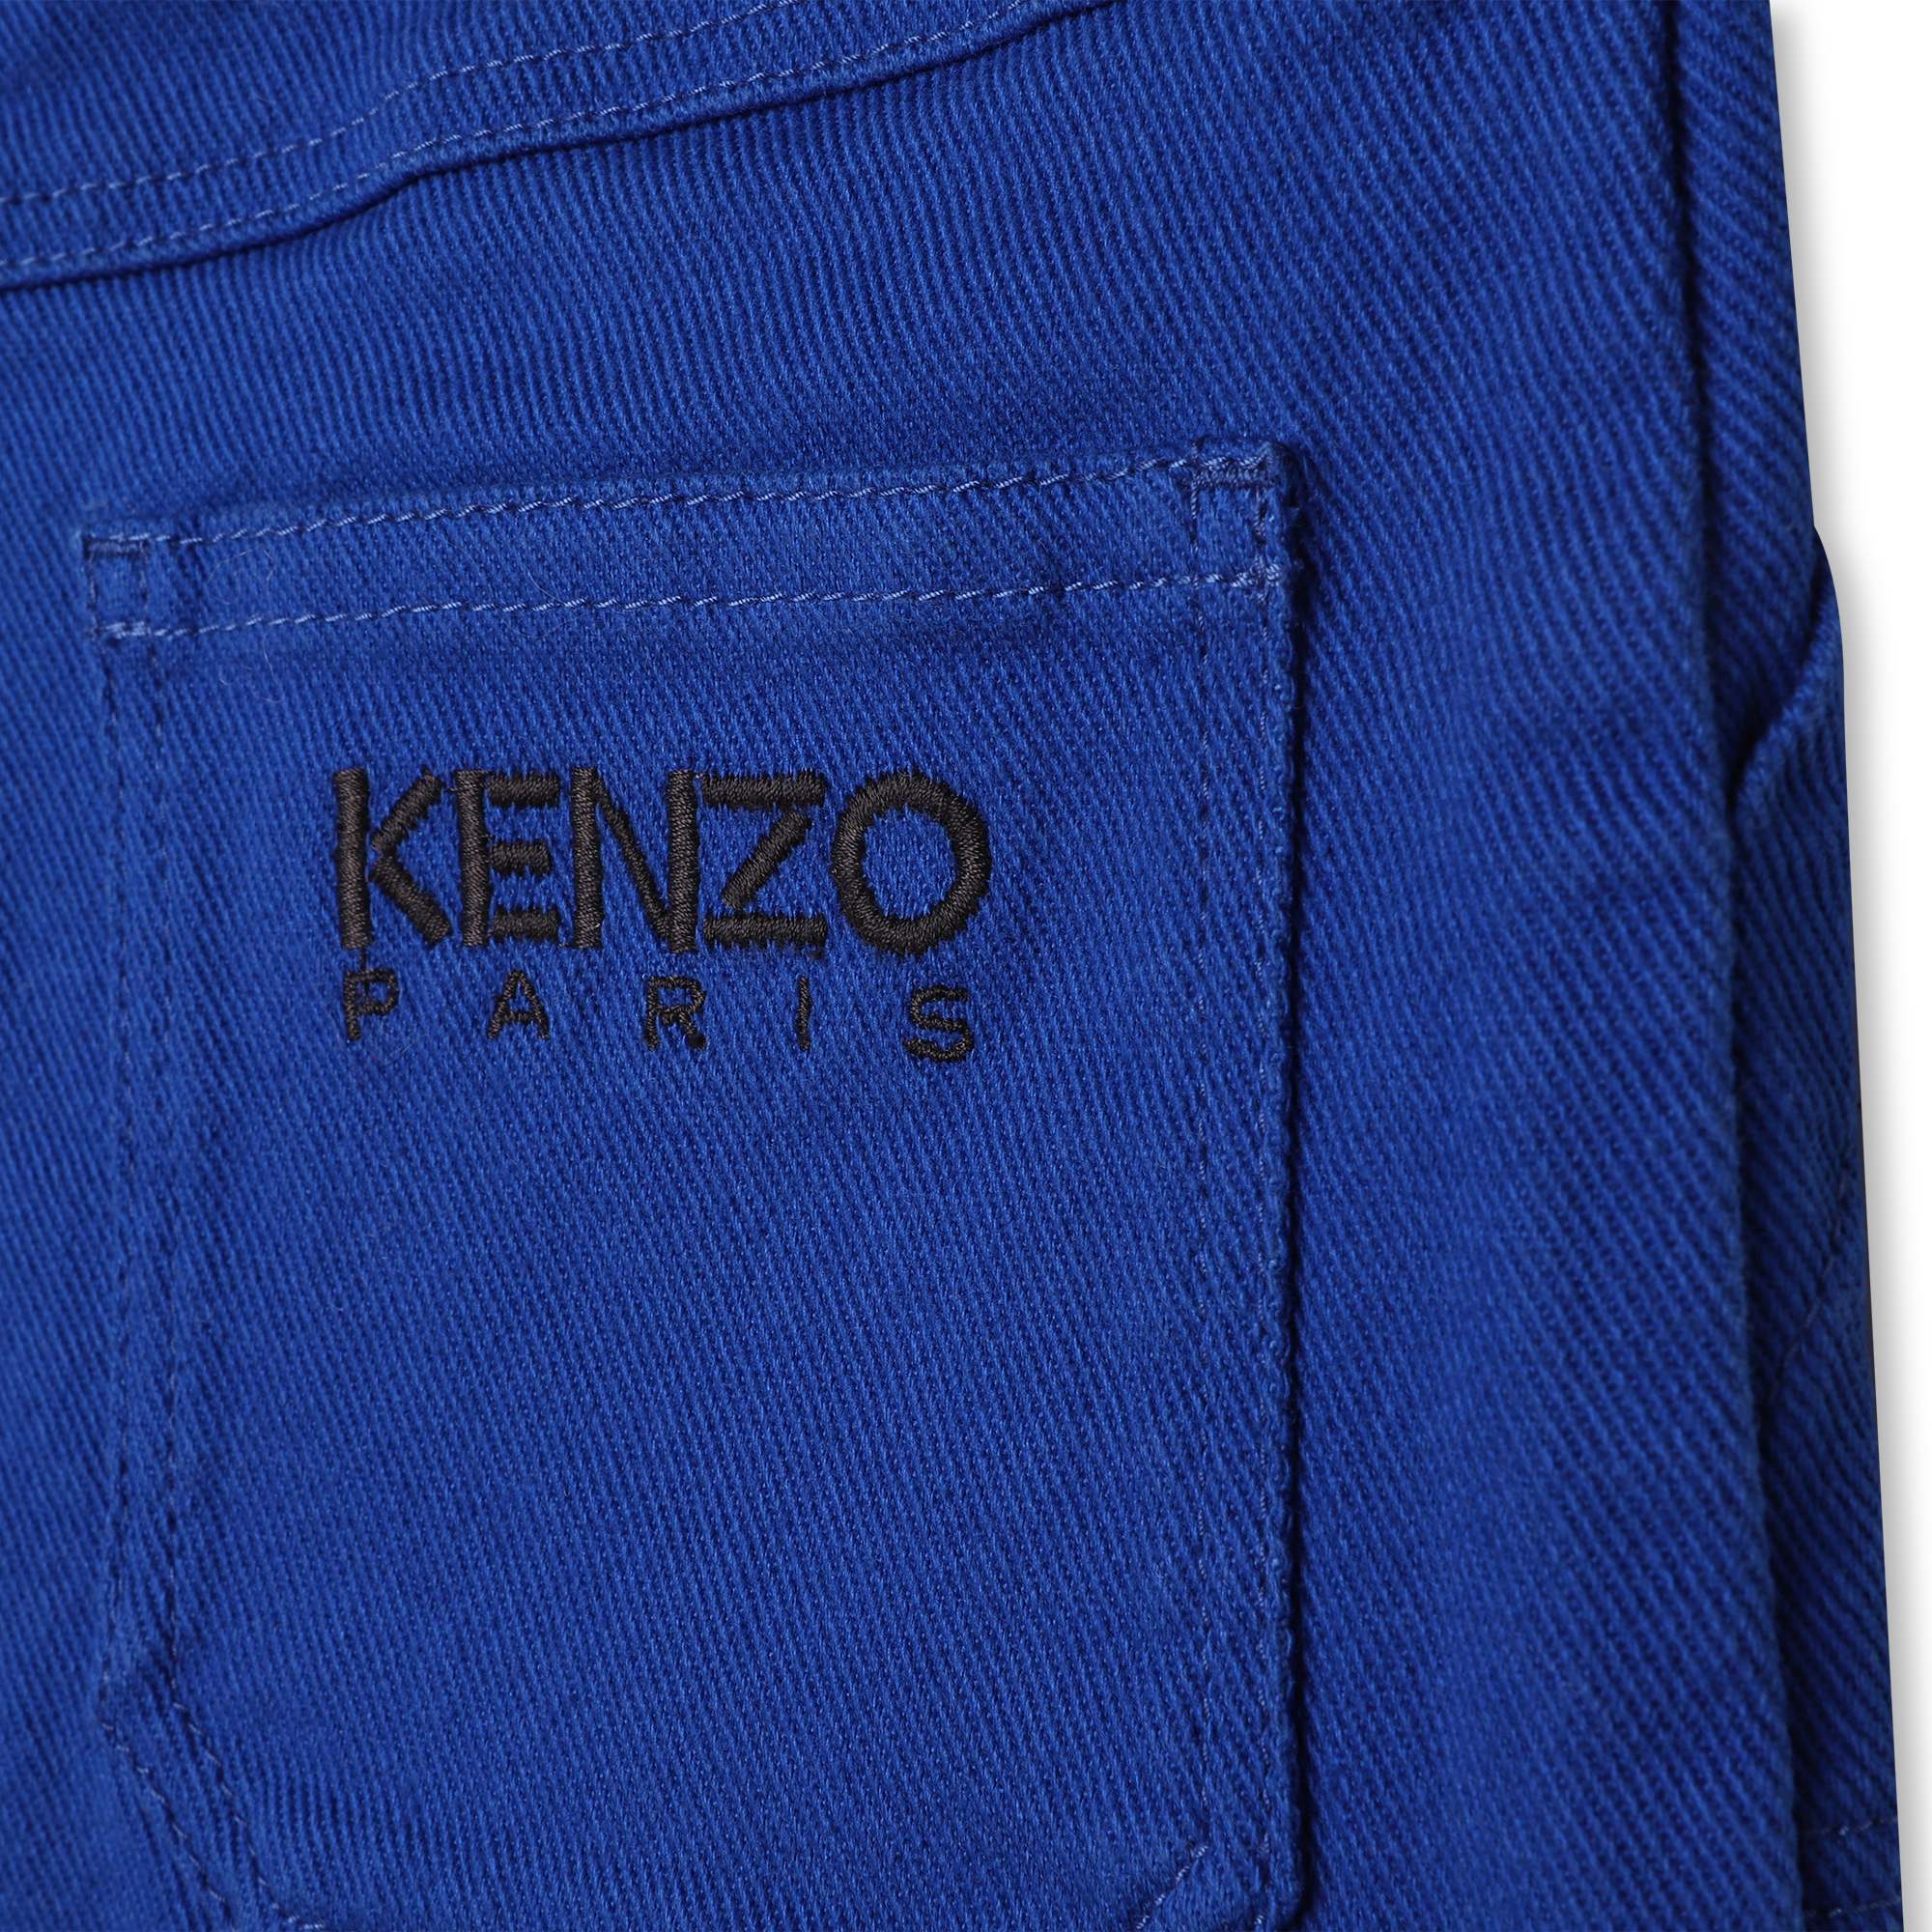 Cotton adjustable-waist skirt KENZO KIDS for GIRL